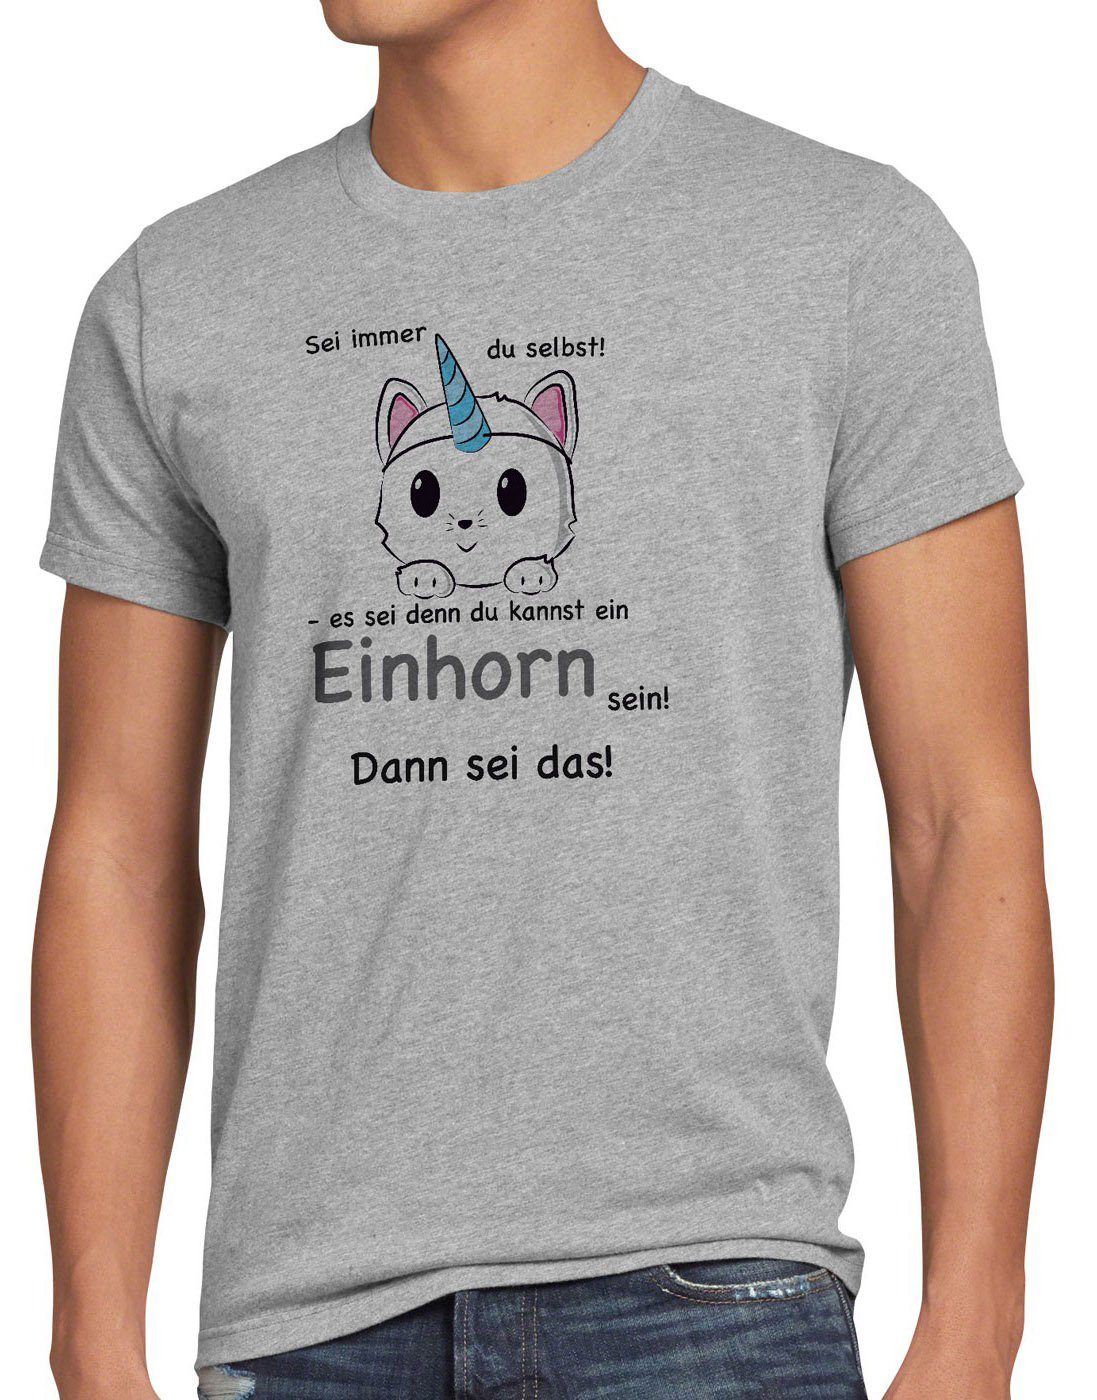 Herren Print-Shirt Unicorn selbst! Sei es du meliert sei style3 grau immer Spruch Fun Katze Einhorn T-Shirt denn